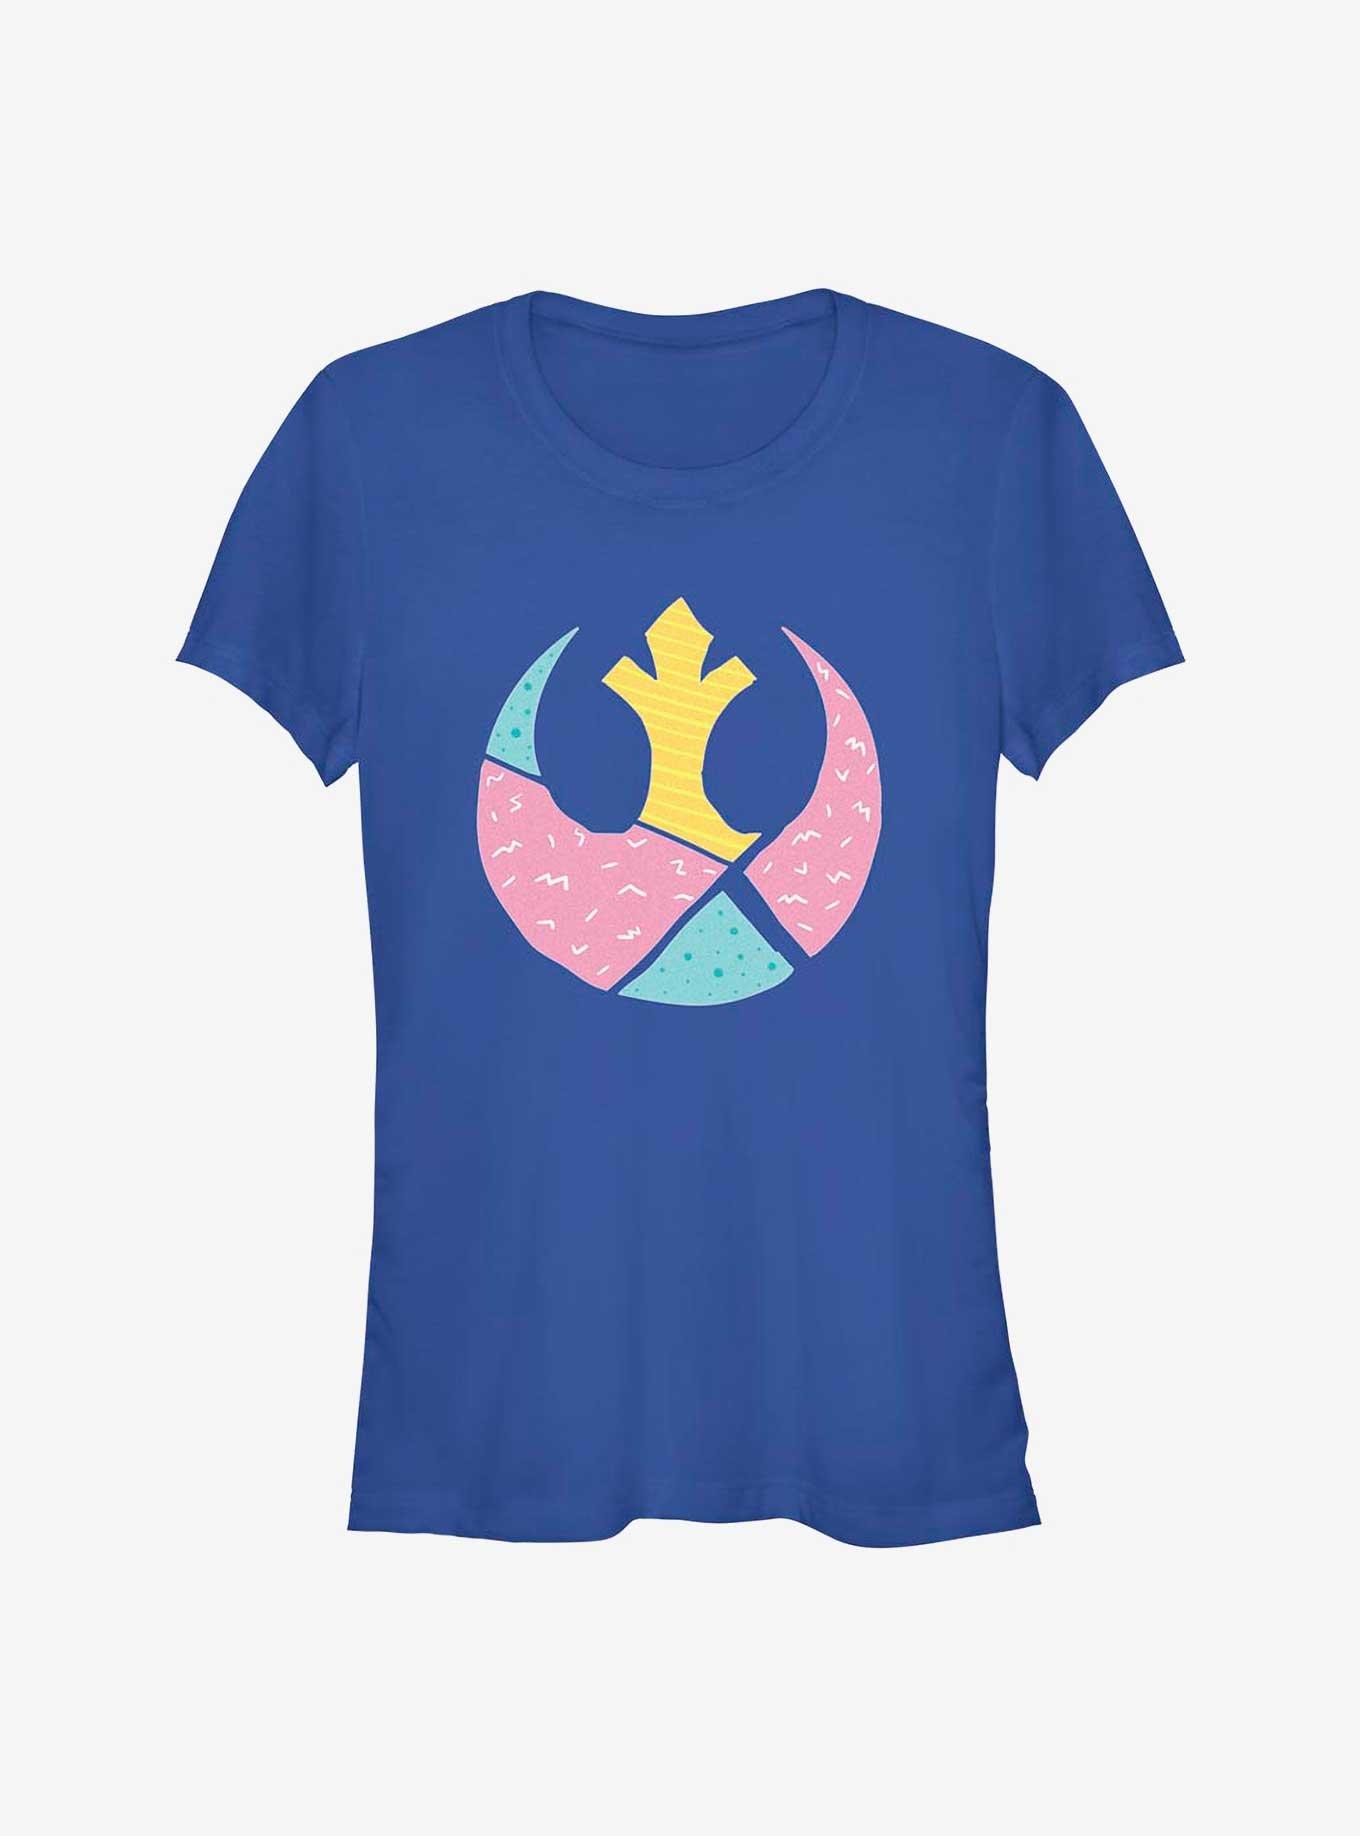 Star Wars Geometric Shaped Rebel Symbol Girls T-Shirt